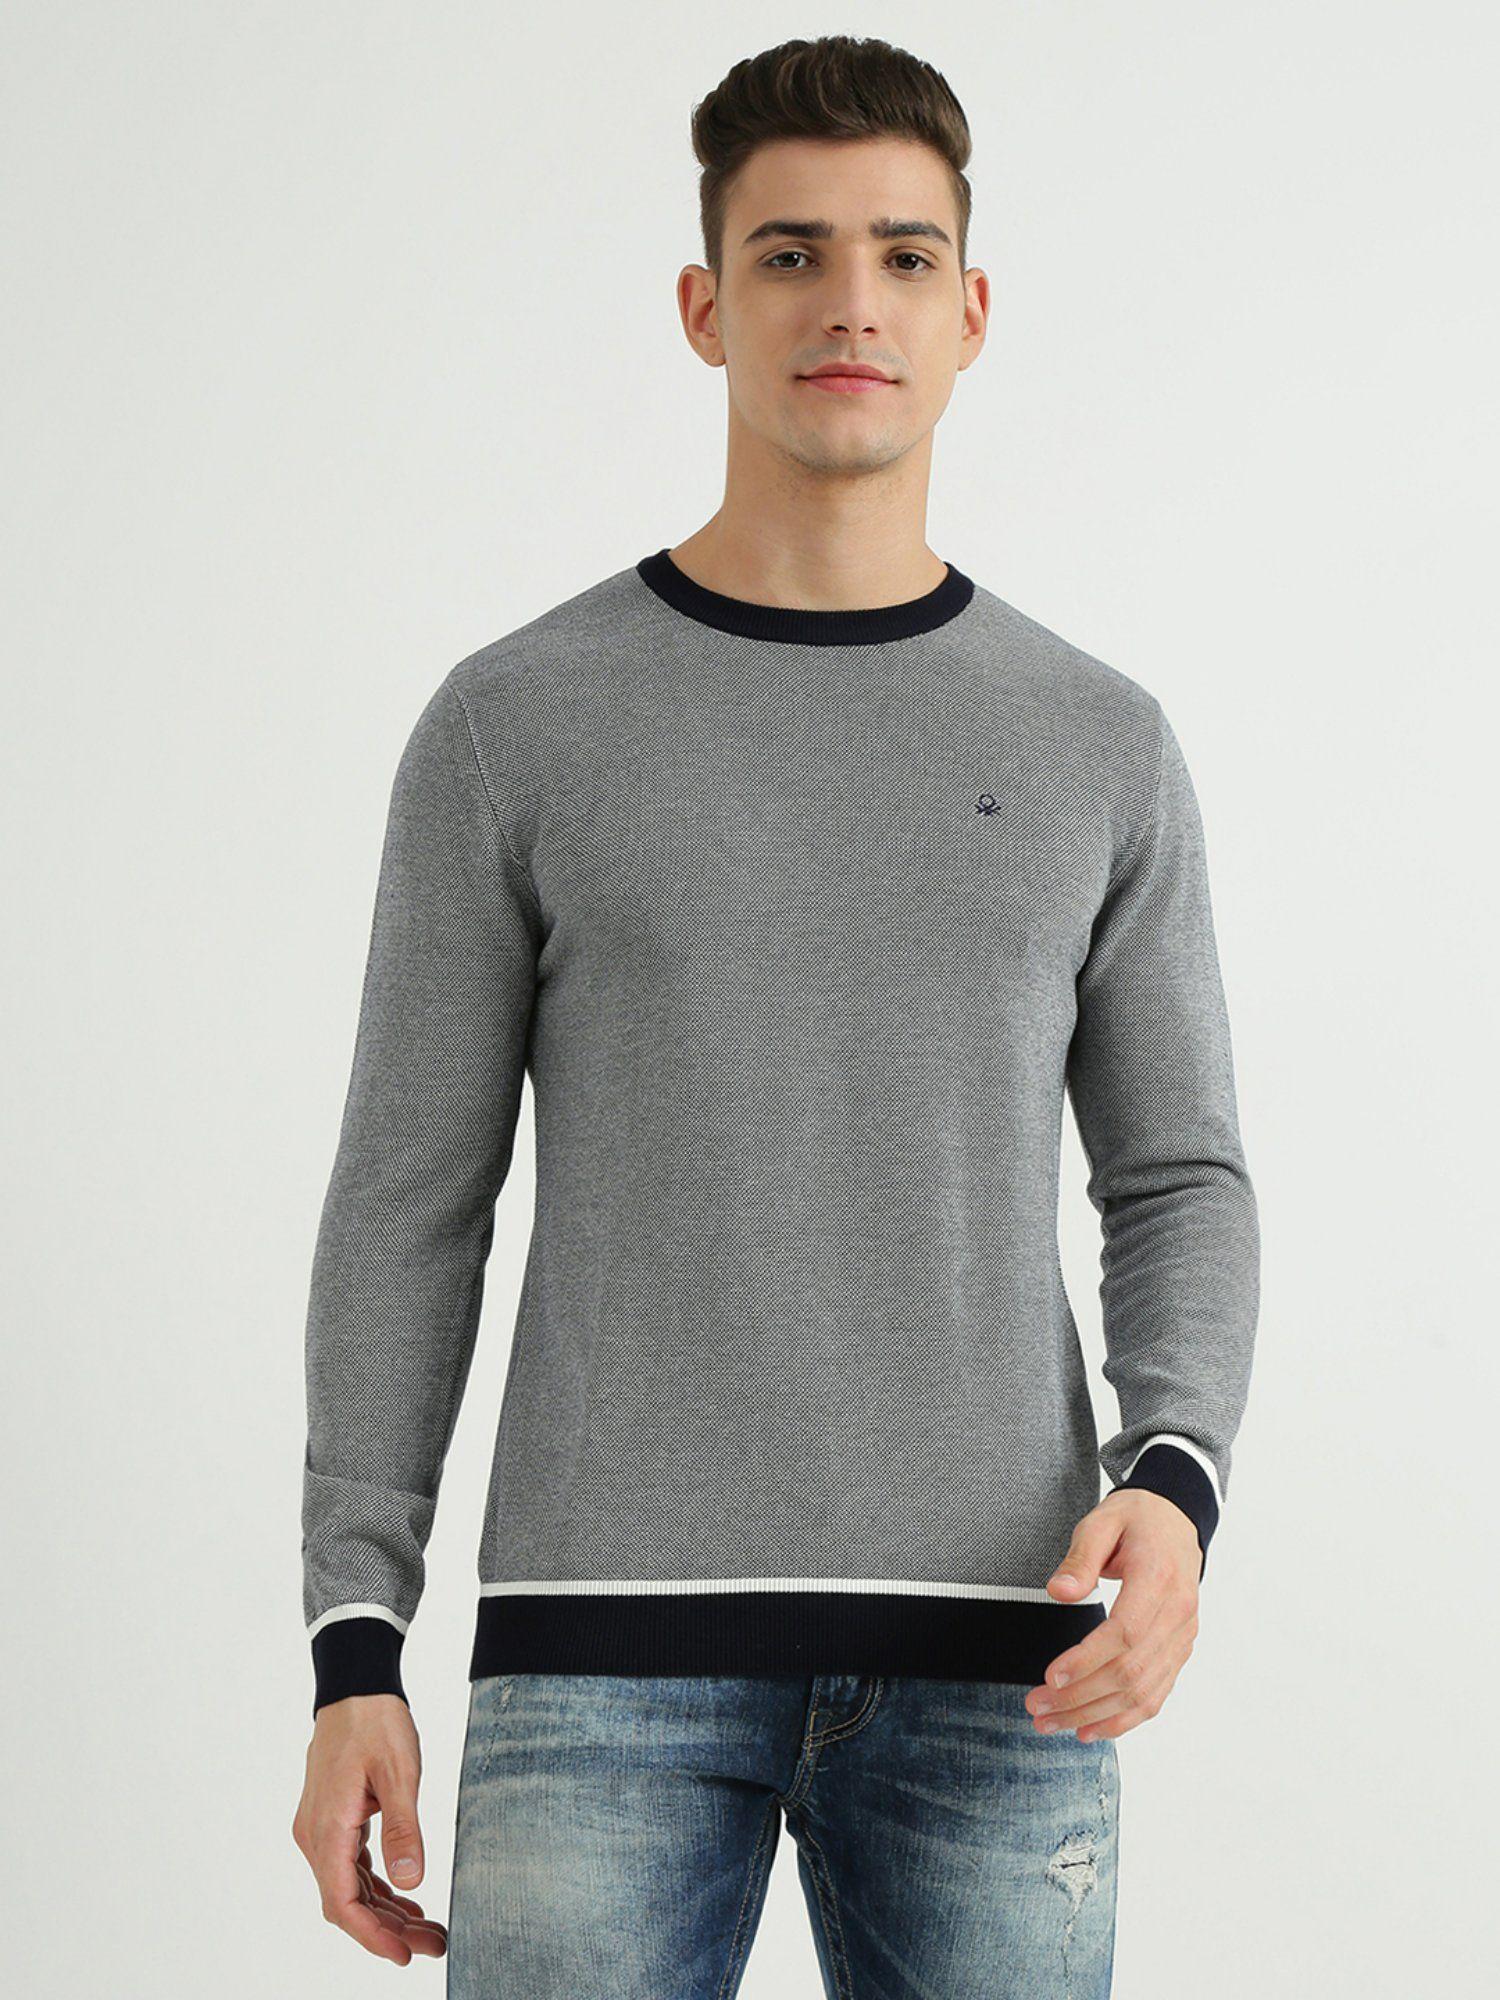 mens long sleeve textured sweater-grey